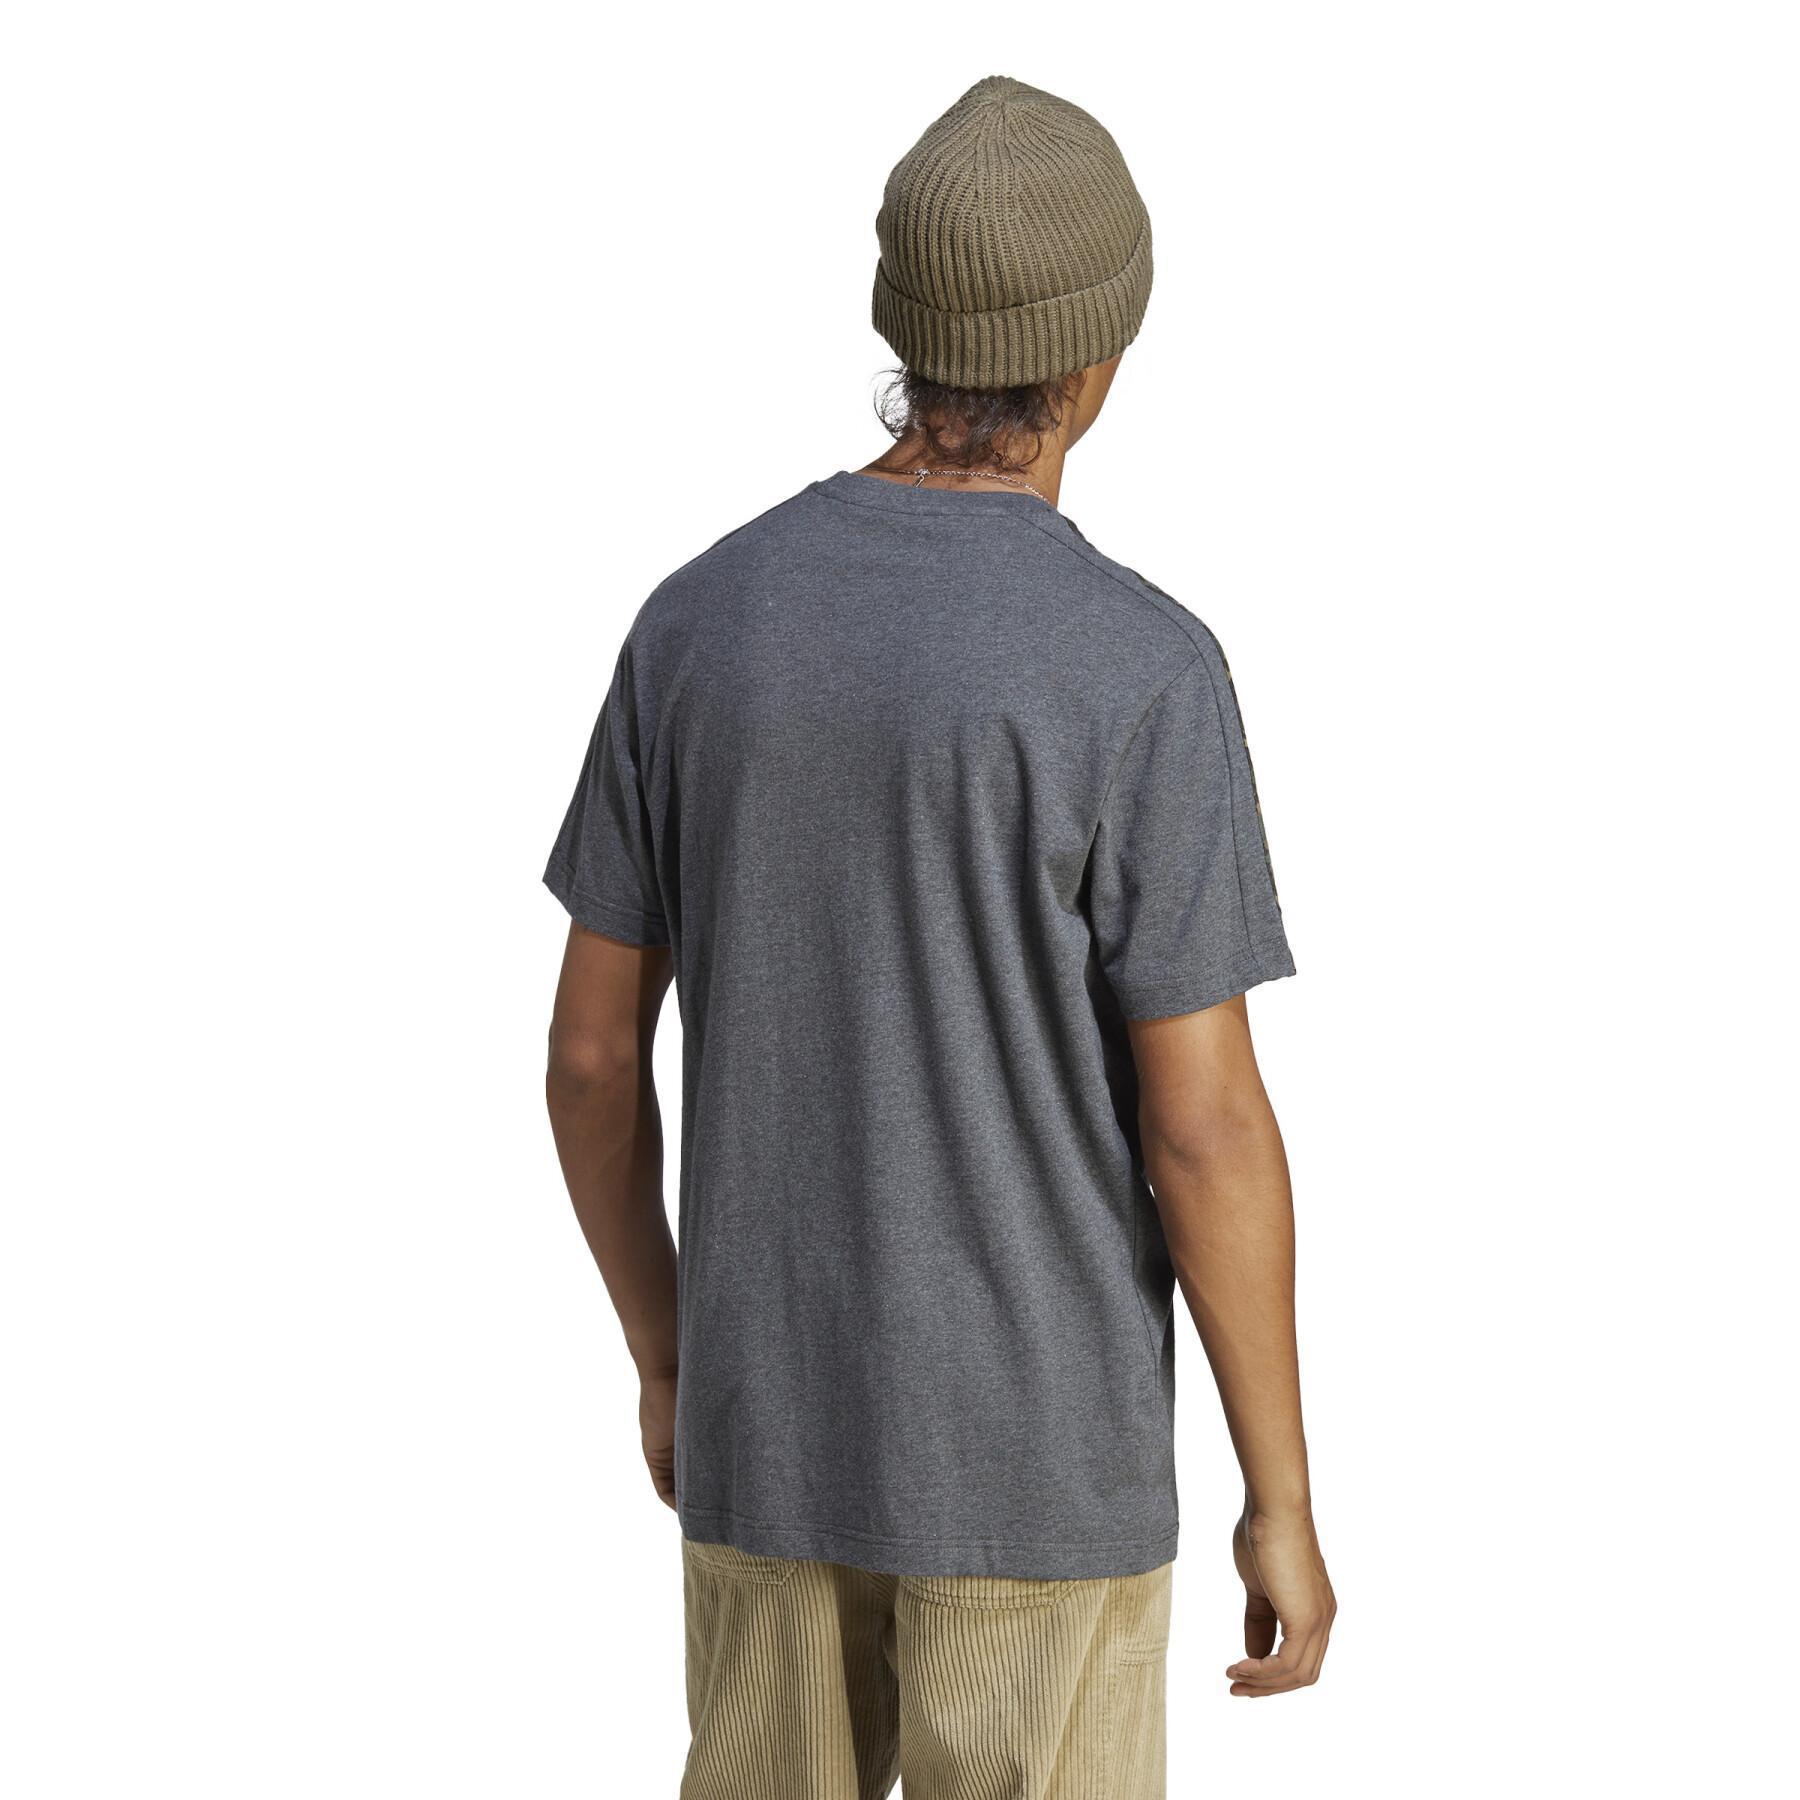 Camisetaadidas 3-Stripes Essentials